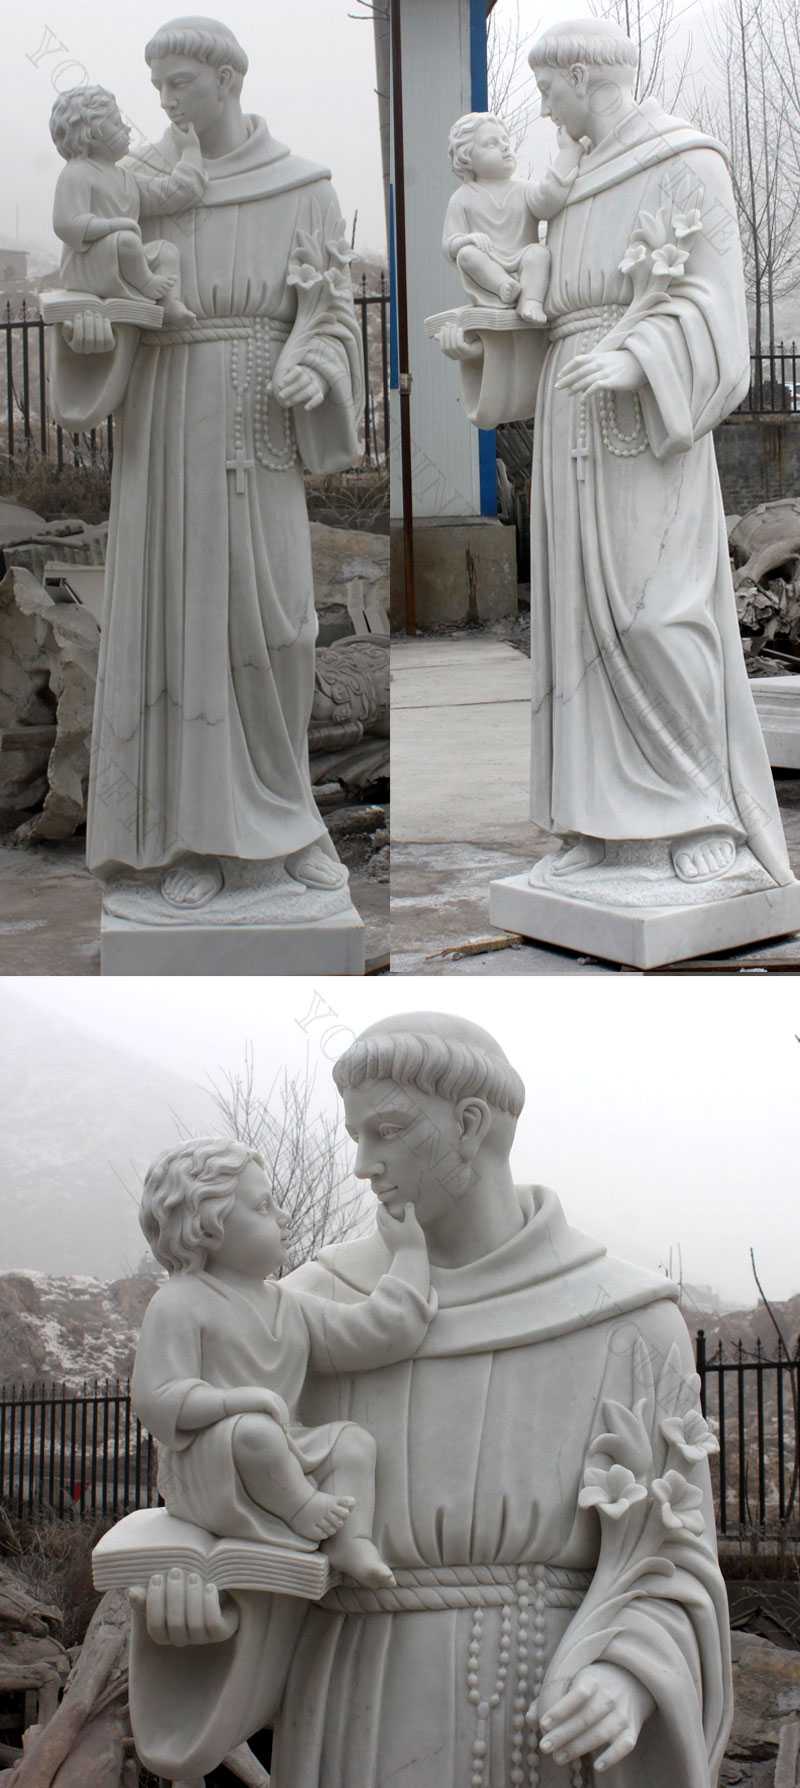 catholic manufacturer direct supply custom made catholic statue of Saint Anthony of padua with infant christ jesus marble statue designs